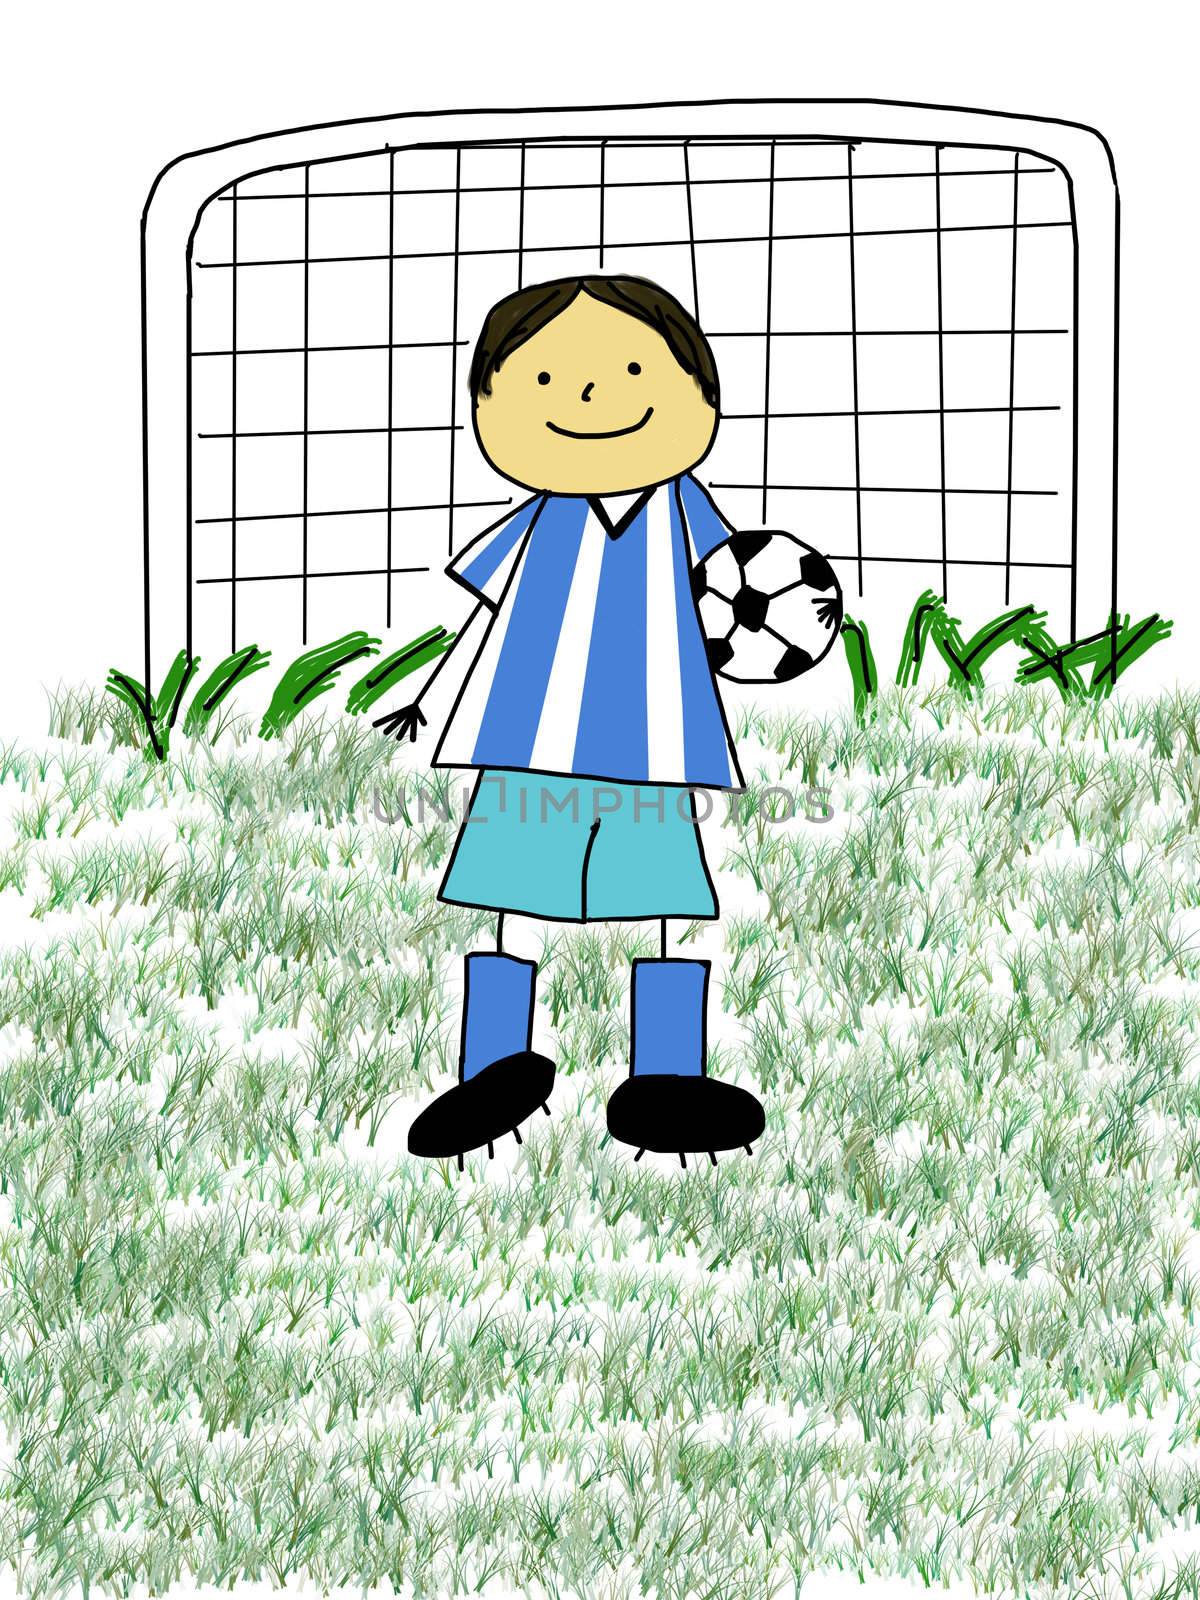 Kids Soccer by dacasdo